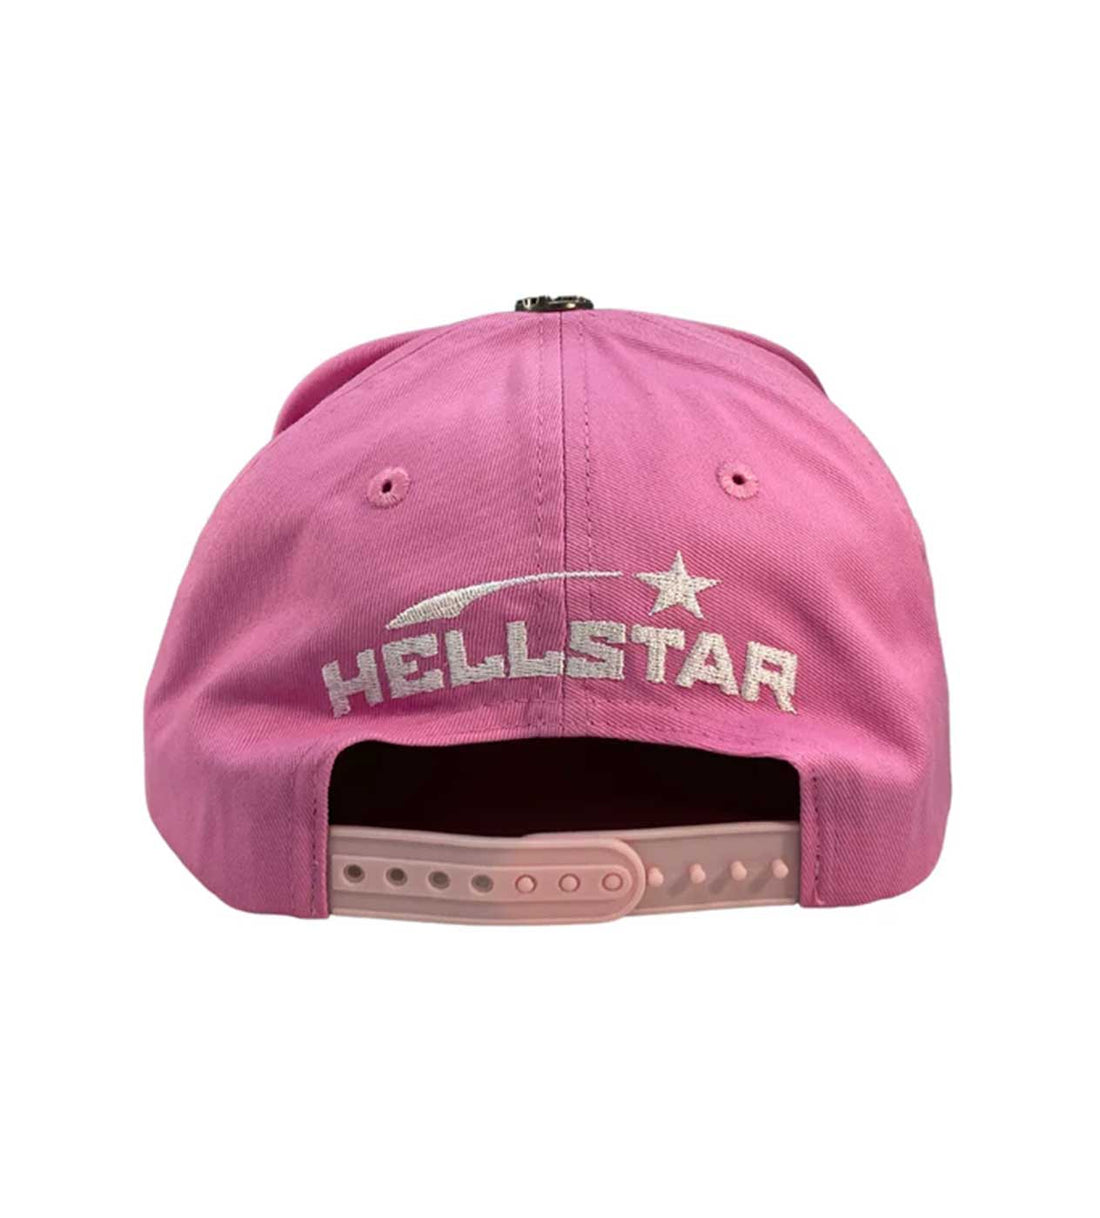 Hellstar OG Pink Snapback